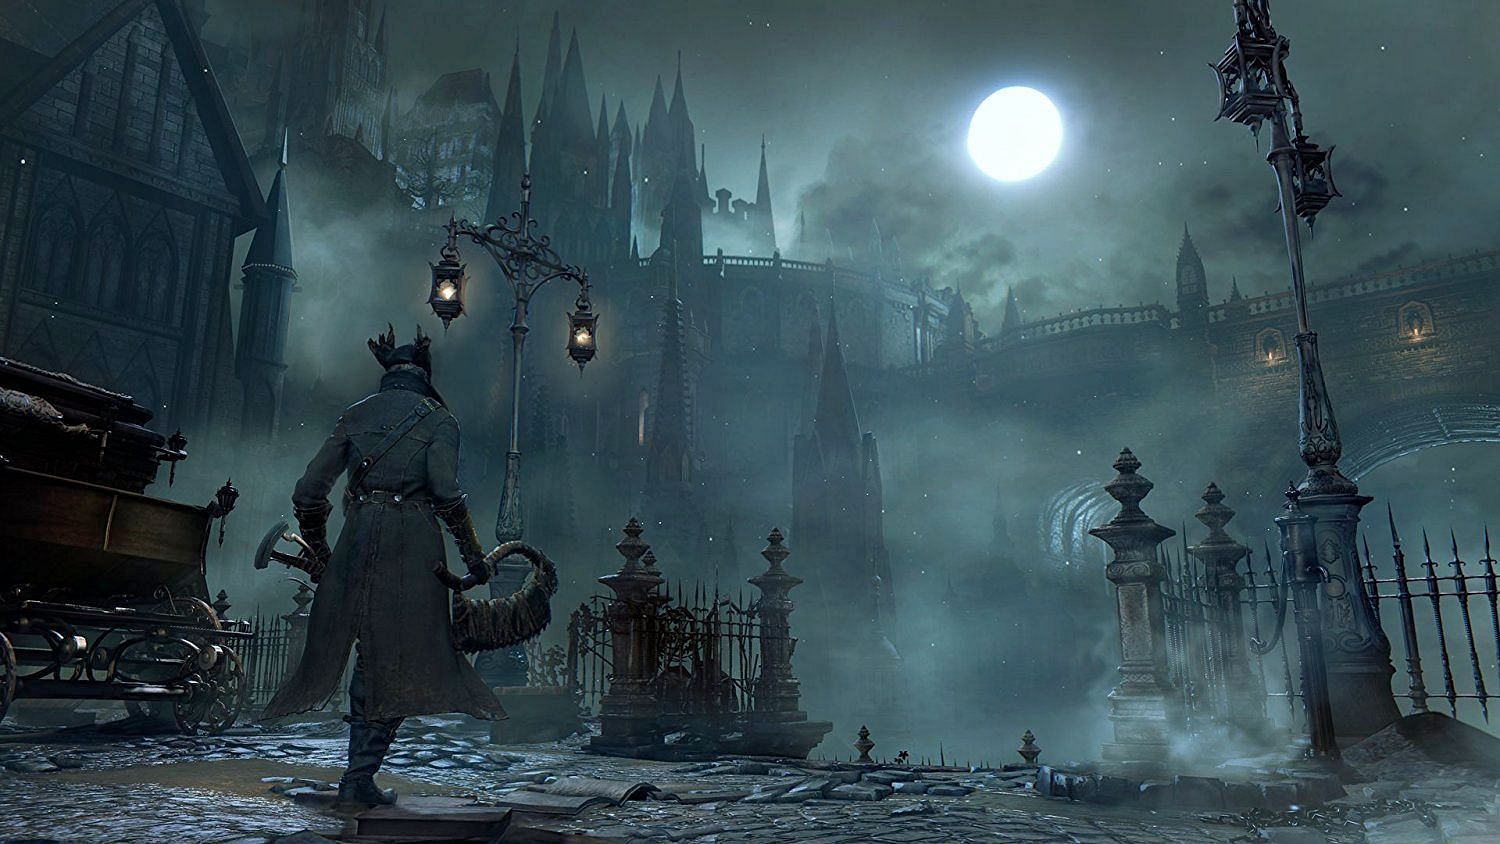 The dark streets of Bloodborne (Image via Sony Interactive Entertainment)